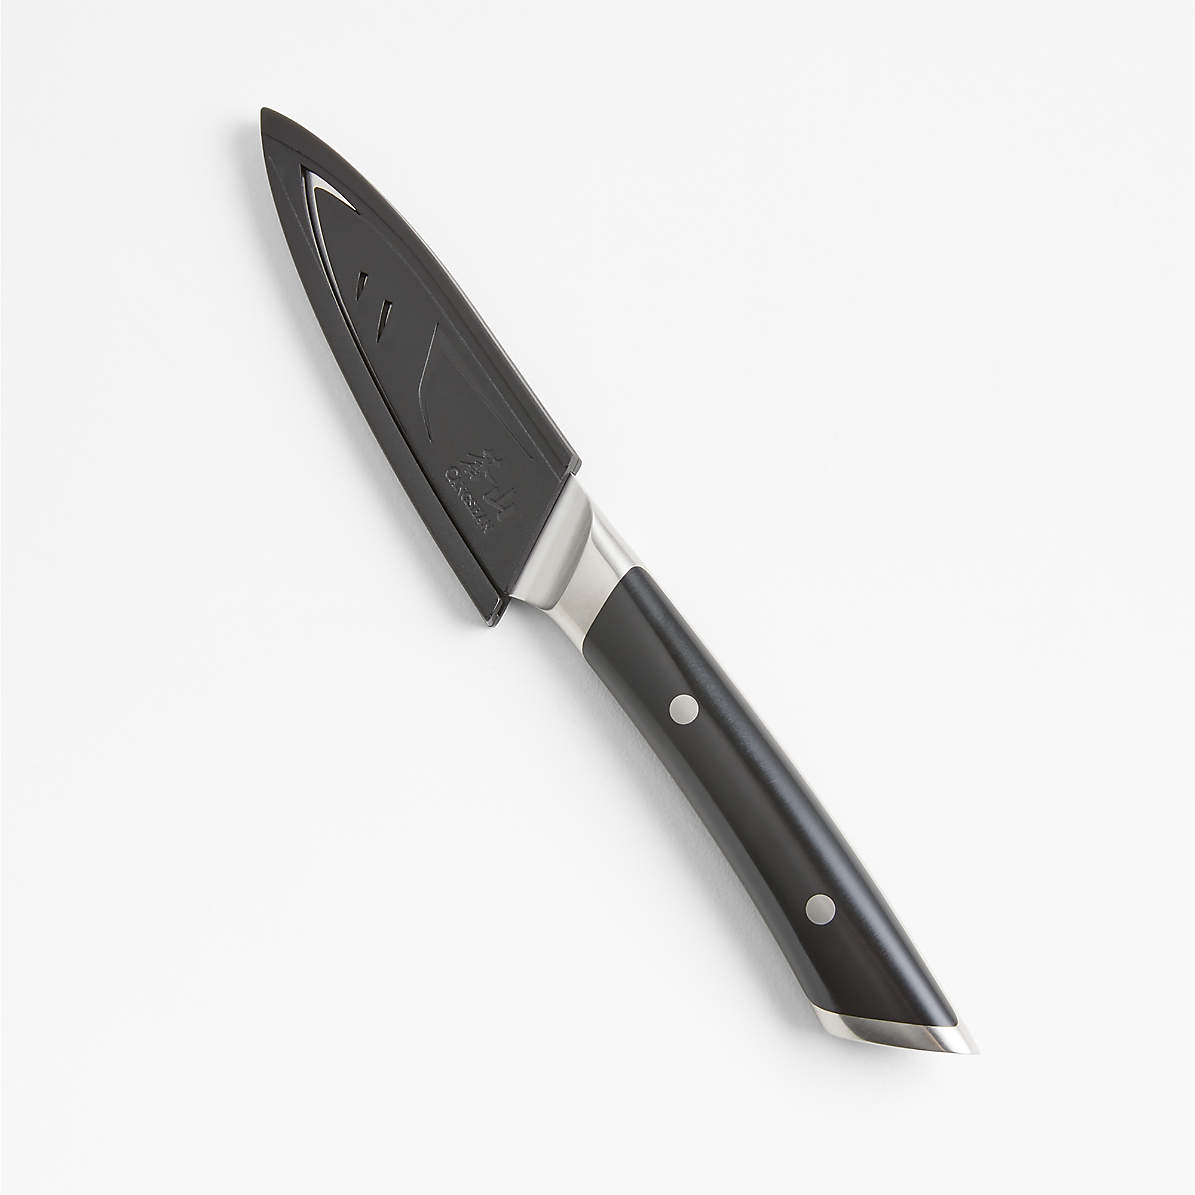 Cangshan HELENA Series German Steel Forged 3.5 Blue Paring Knife w/ Sheath